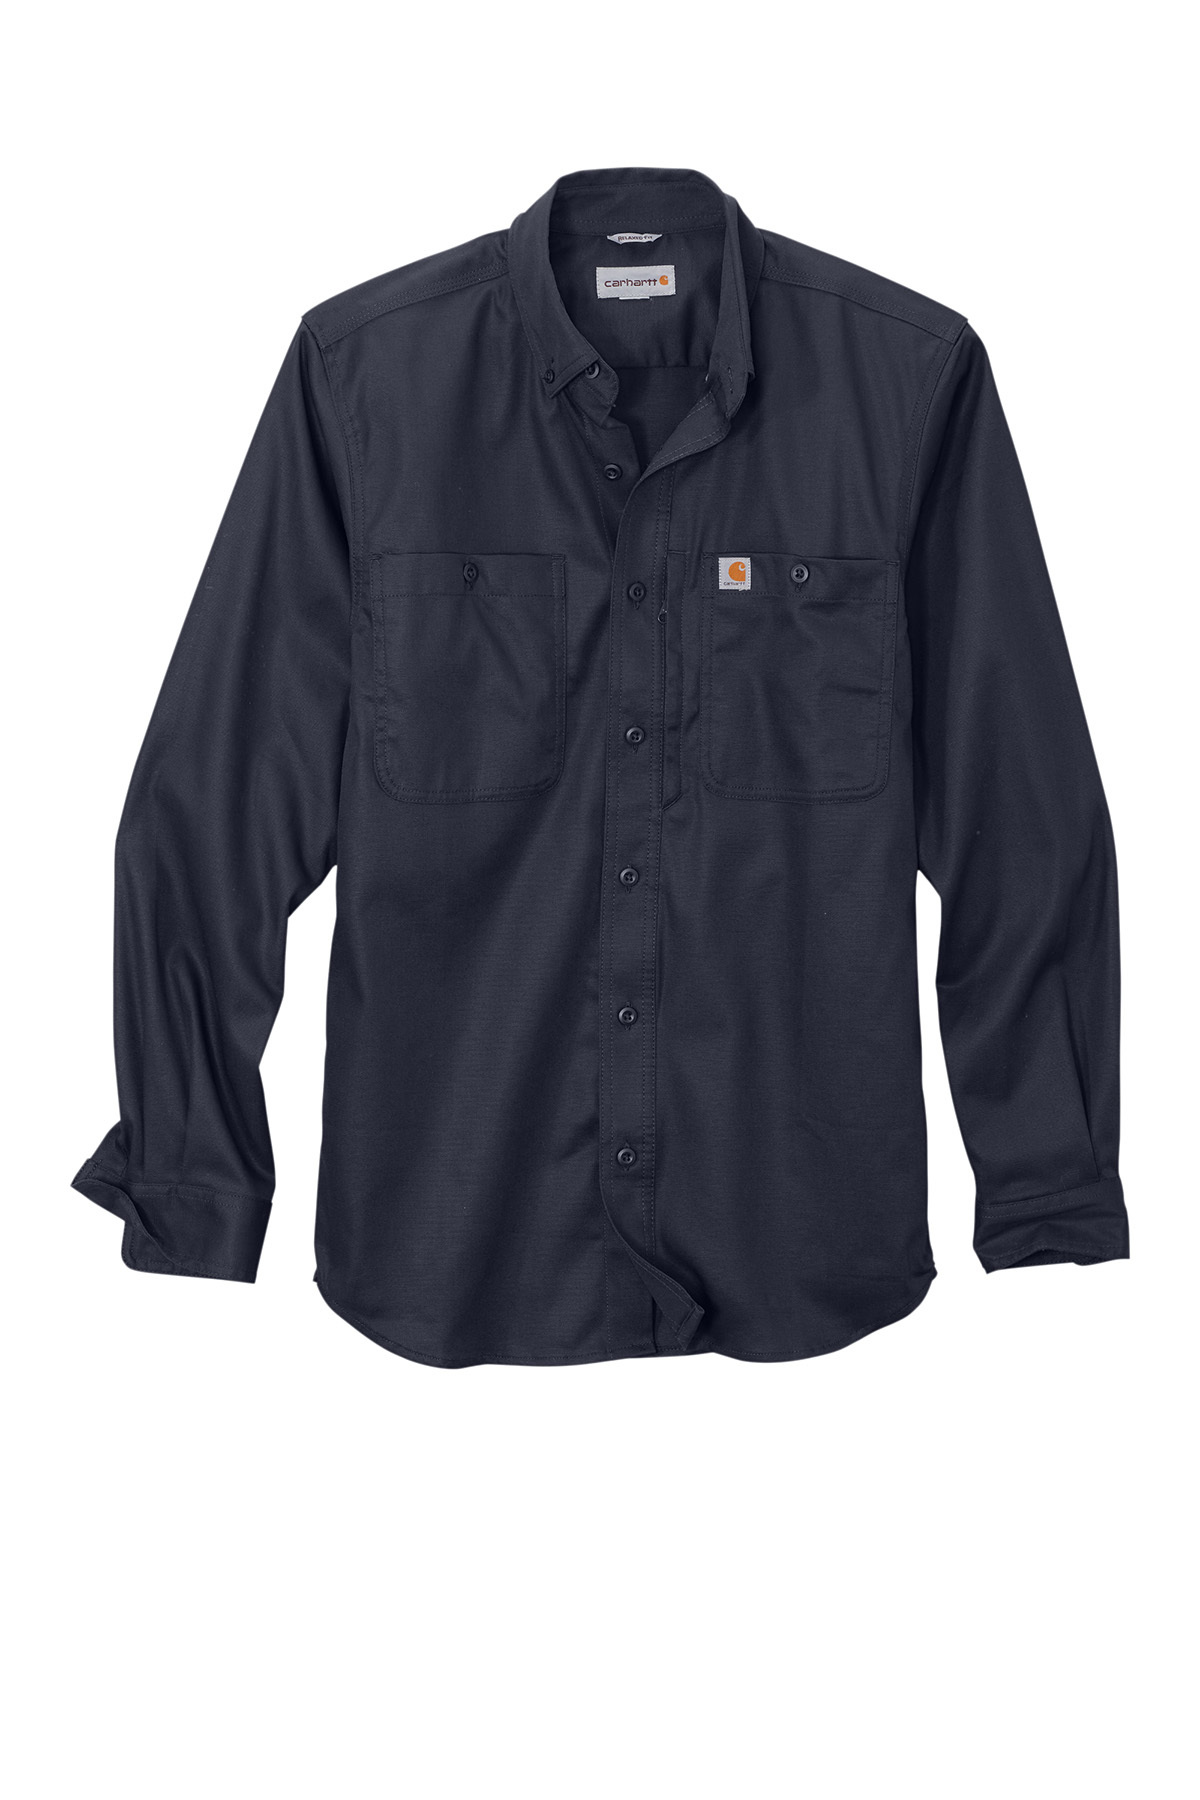 SanMar Rugged | Series Professional Sleeve Carhartt Shirt | Product Long